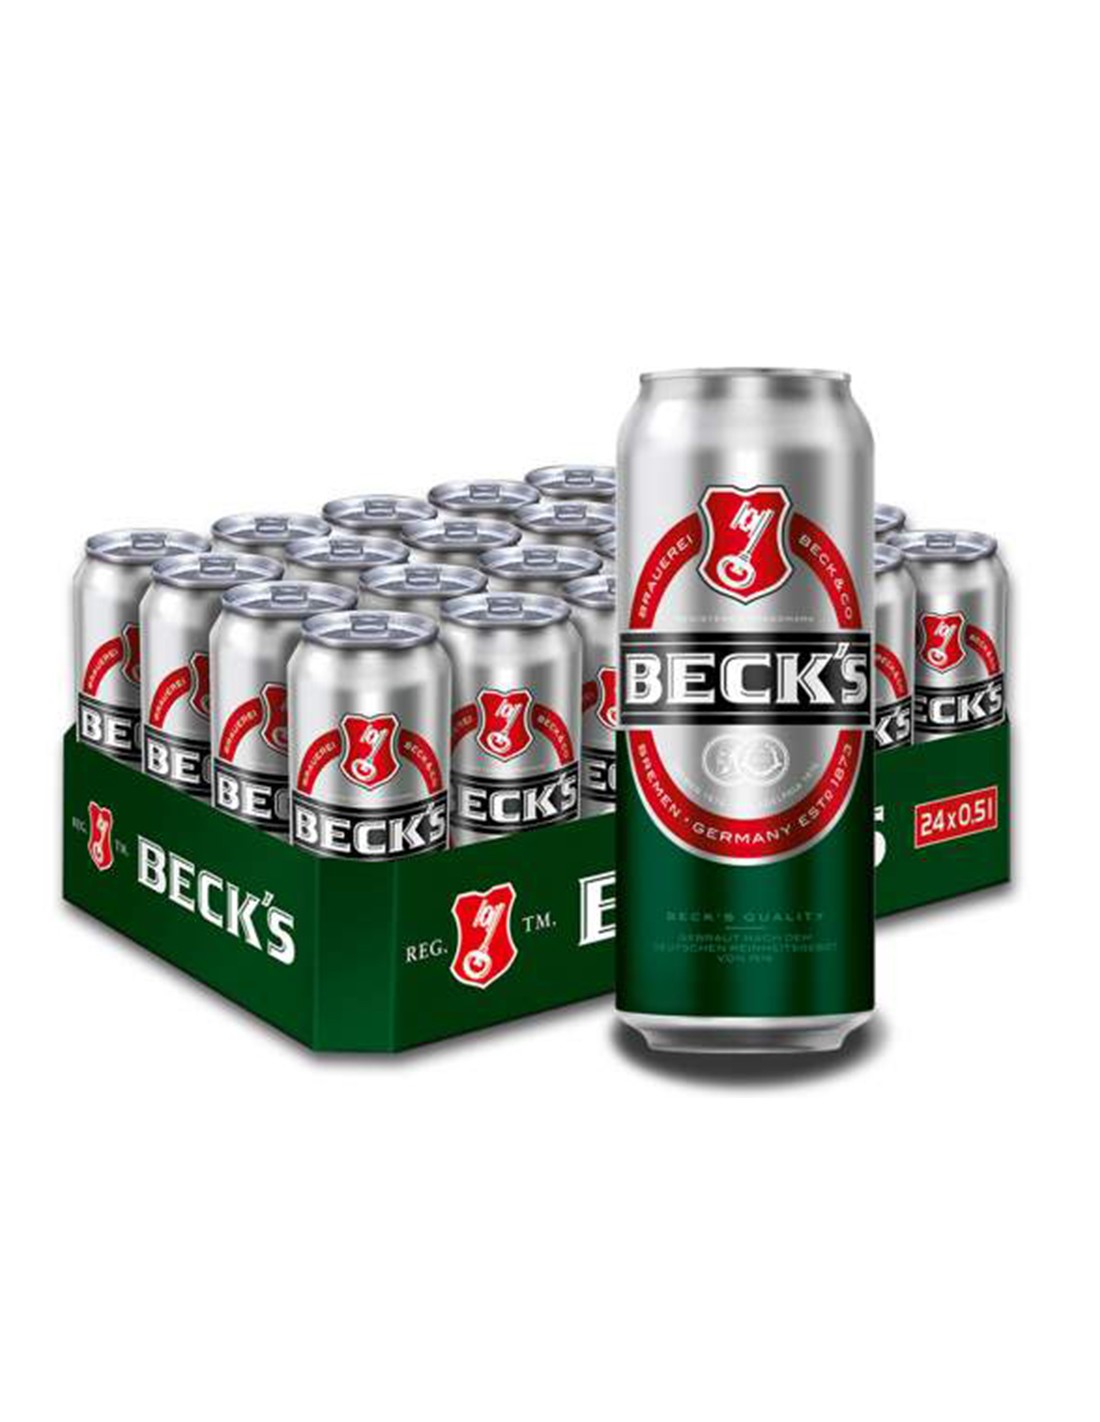 Bax 24 bucati bere blonda, Pilsner, Beck’s, 4.9% alc., 0.5L, doza, Romania alcooldiscount.ro